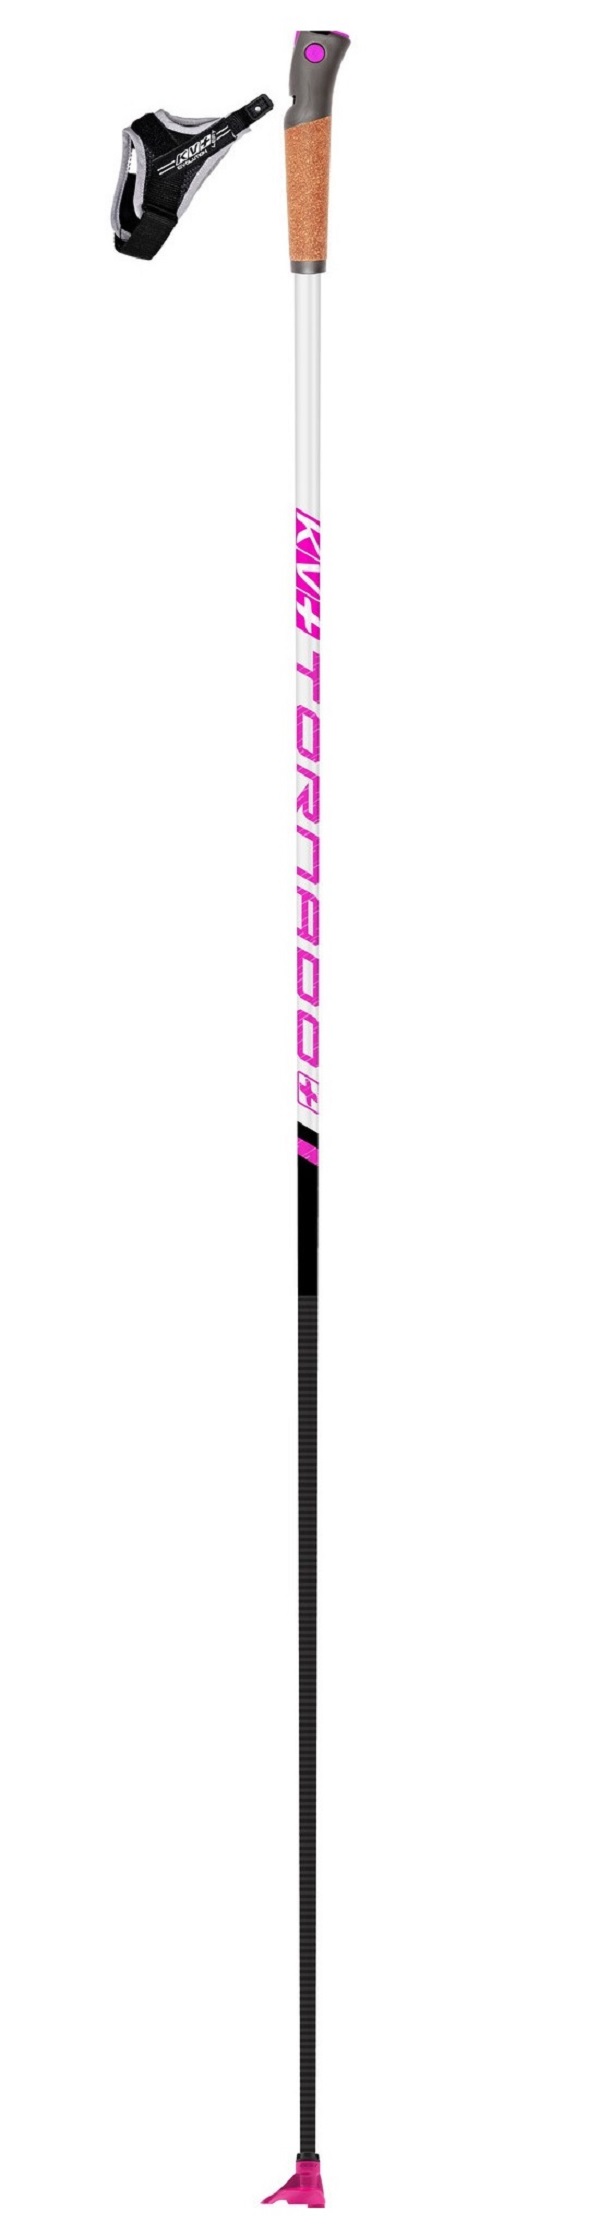 Лыжные палки KV+ Tornado plus jr pink qcd, 23P003JQP